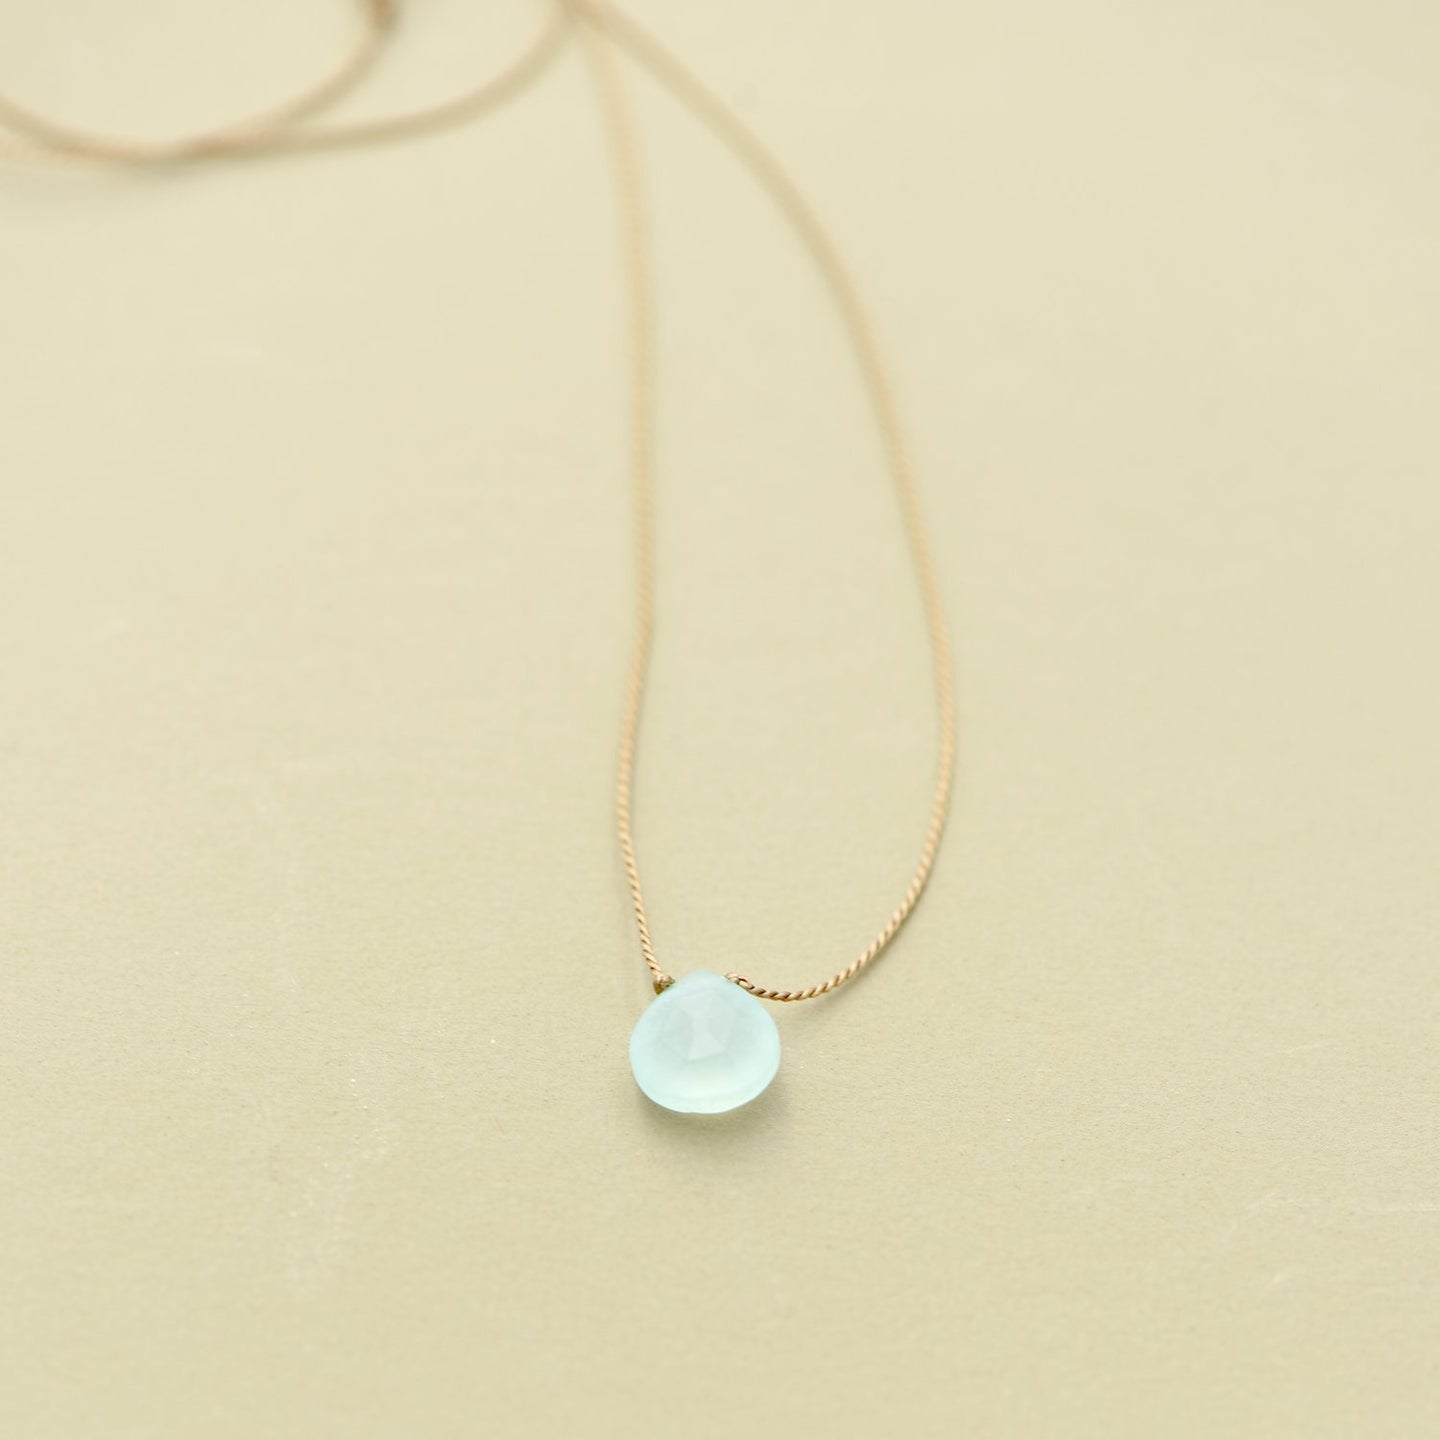 Teardrop Necklace - Choose Your Gemstone